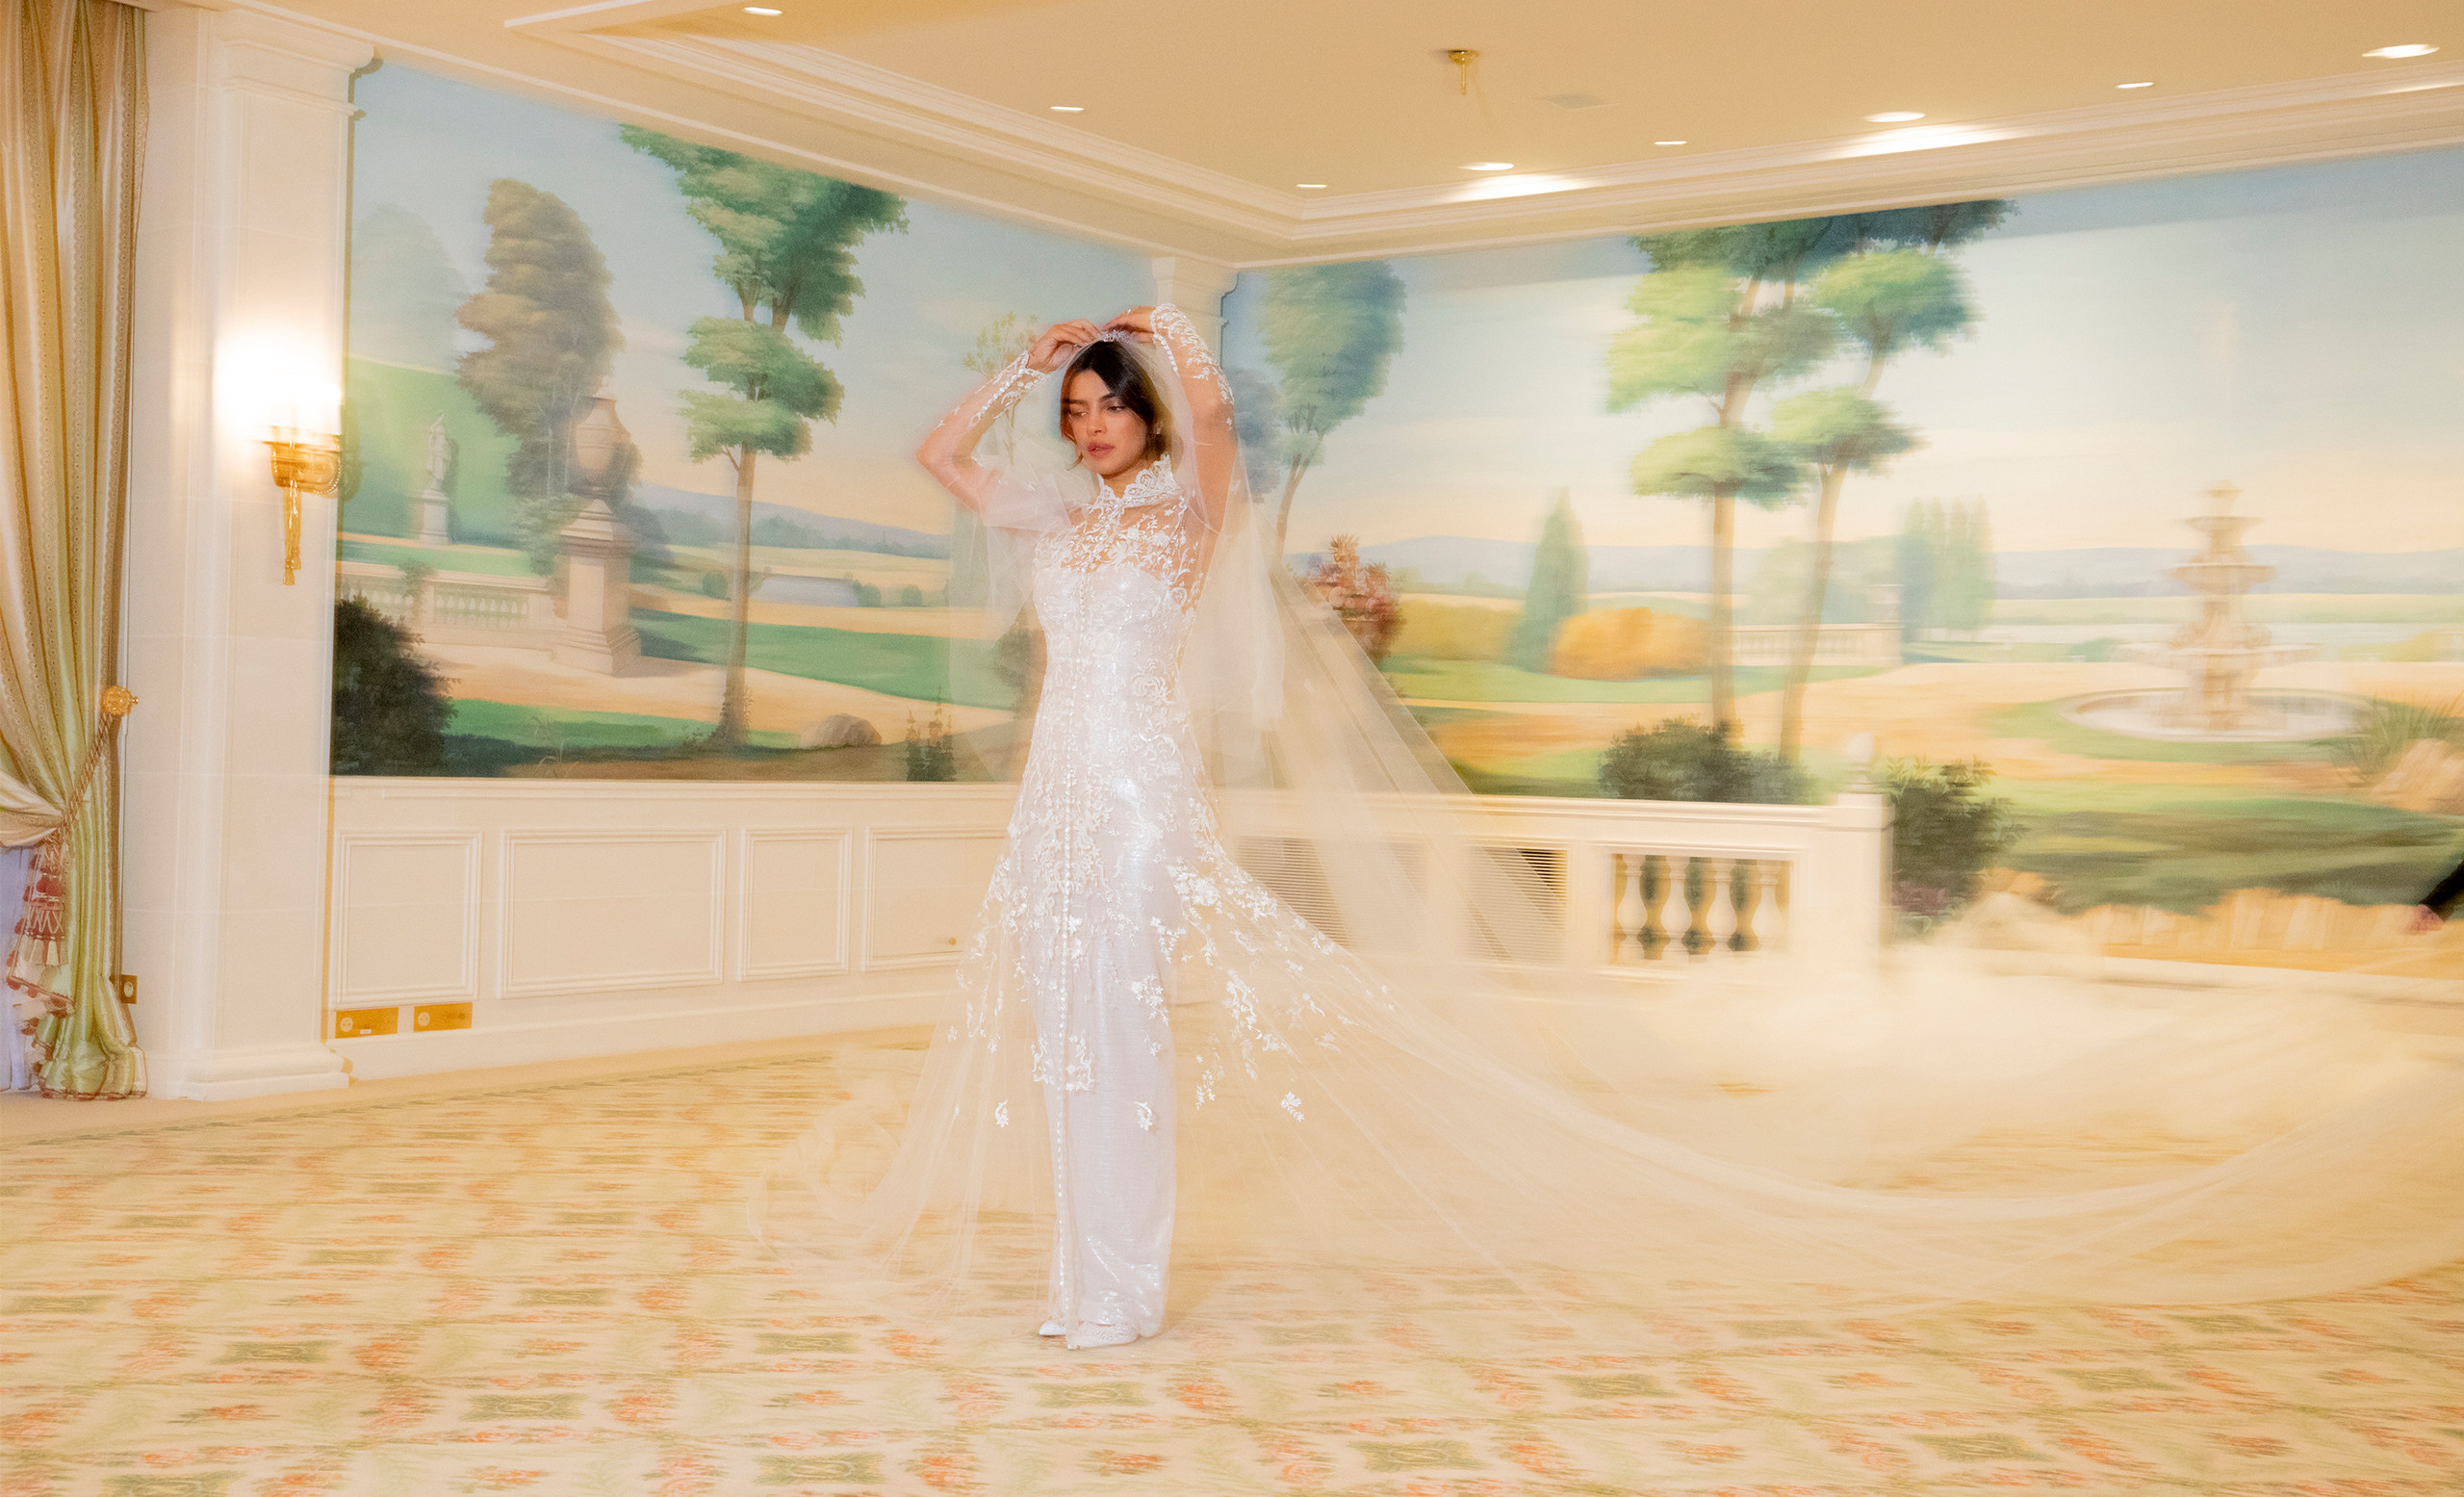 Priyanka Chopra's Wedding Gown: Inside Details About The